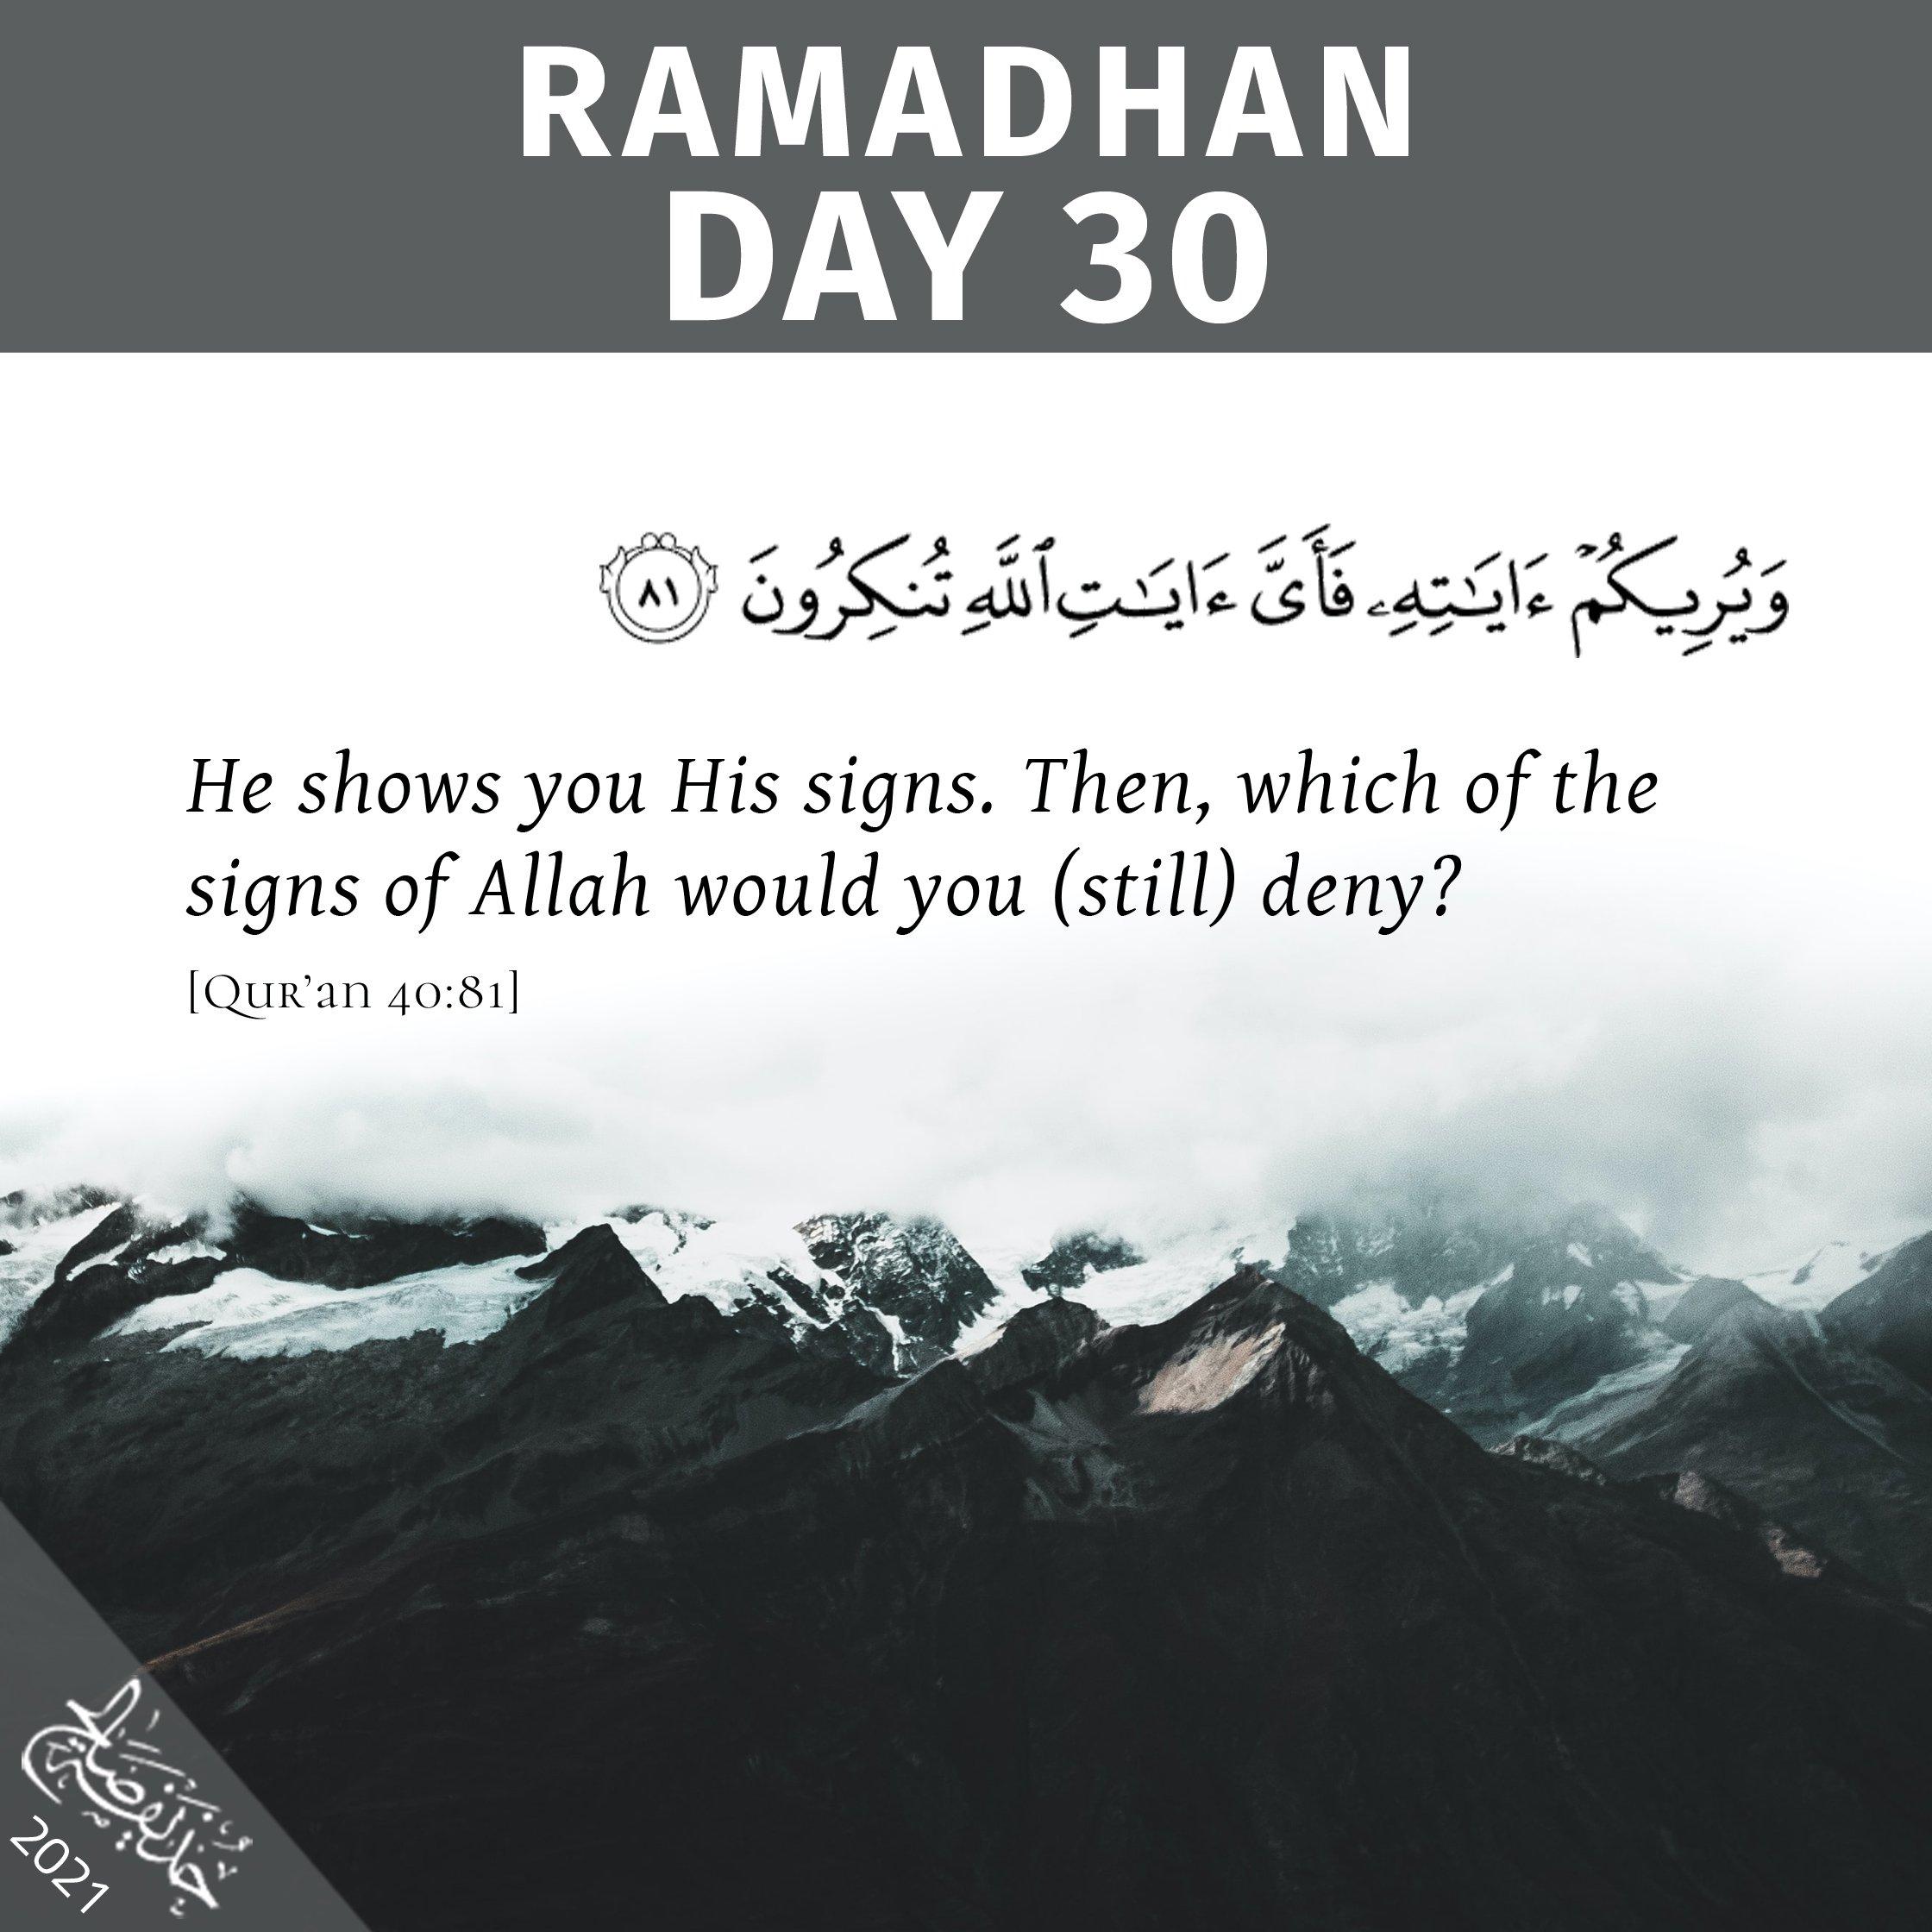 E1JxrNYXoAQ5tm formatjpgname4096x4096 1 - Daily Ramadhan Reminders (2021)